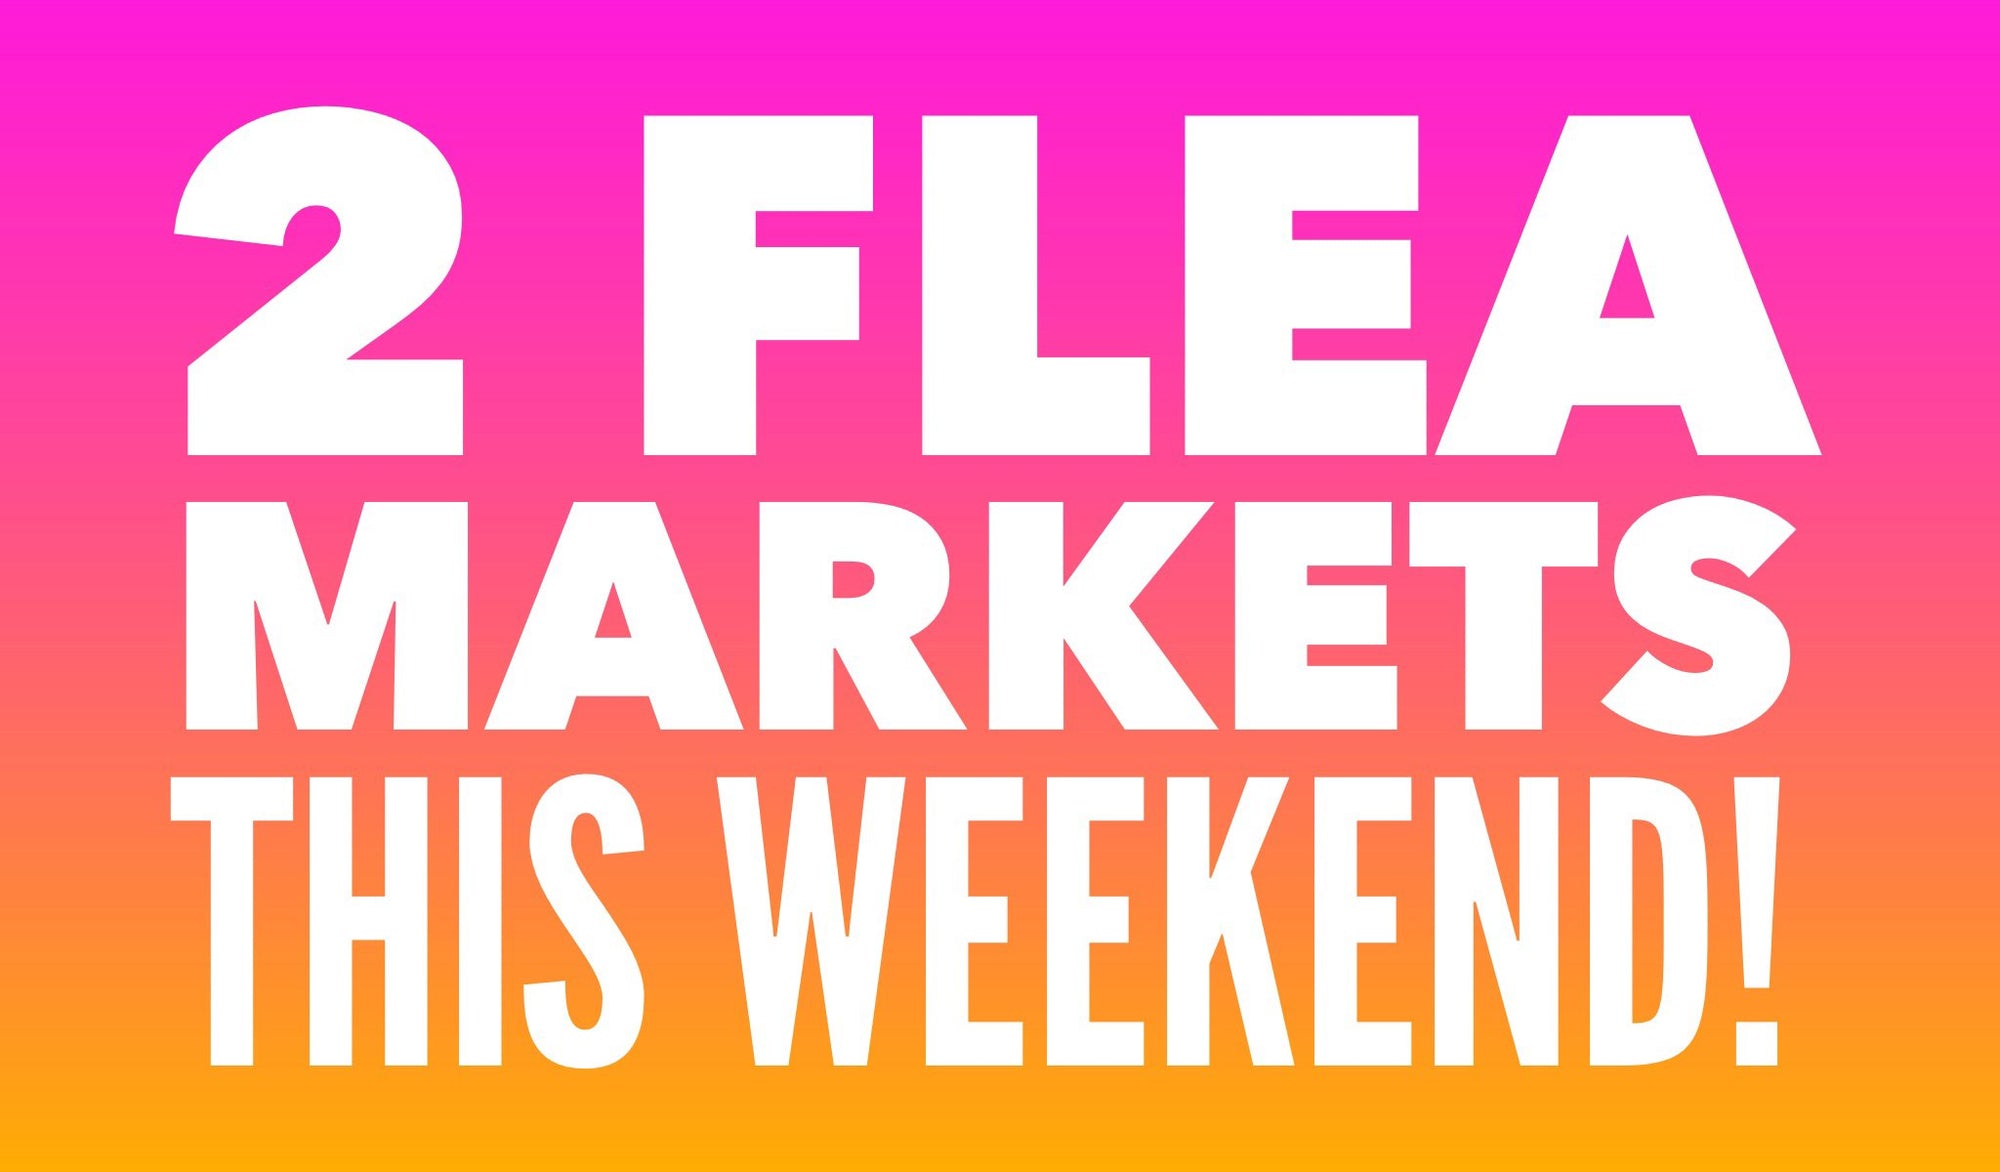 2 flea markets this weekend